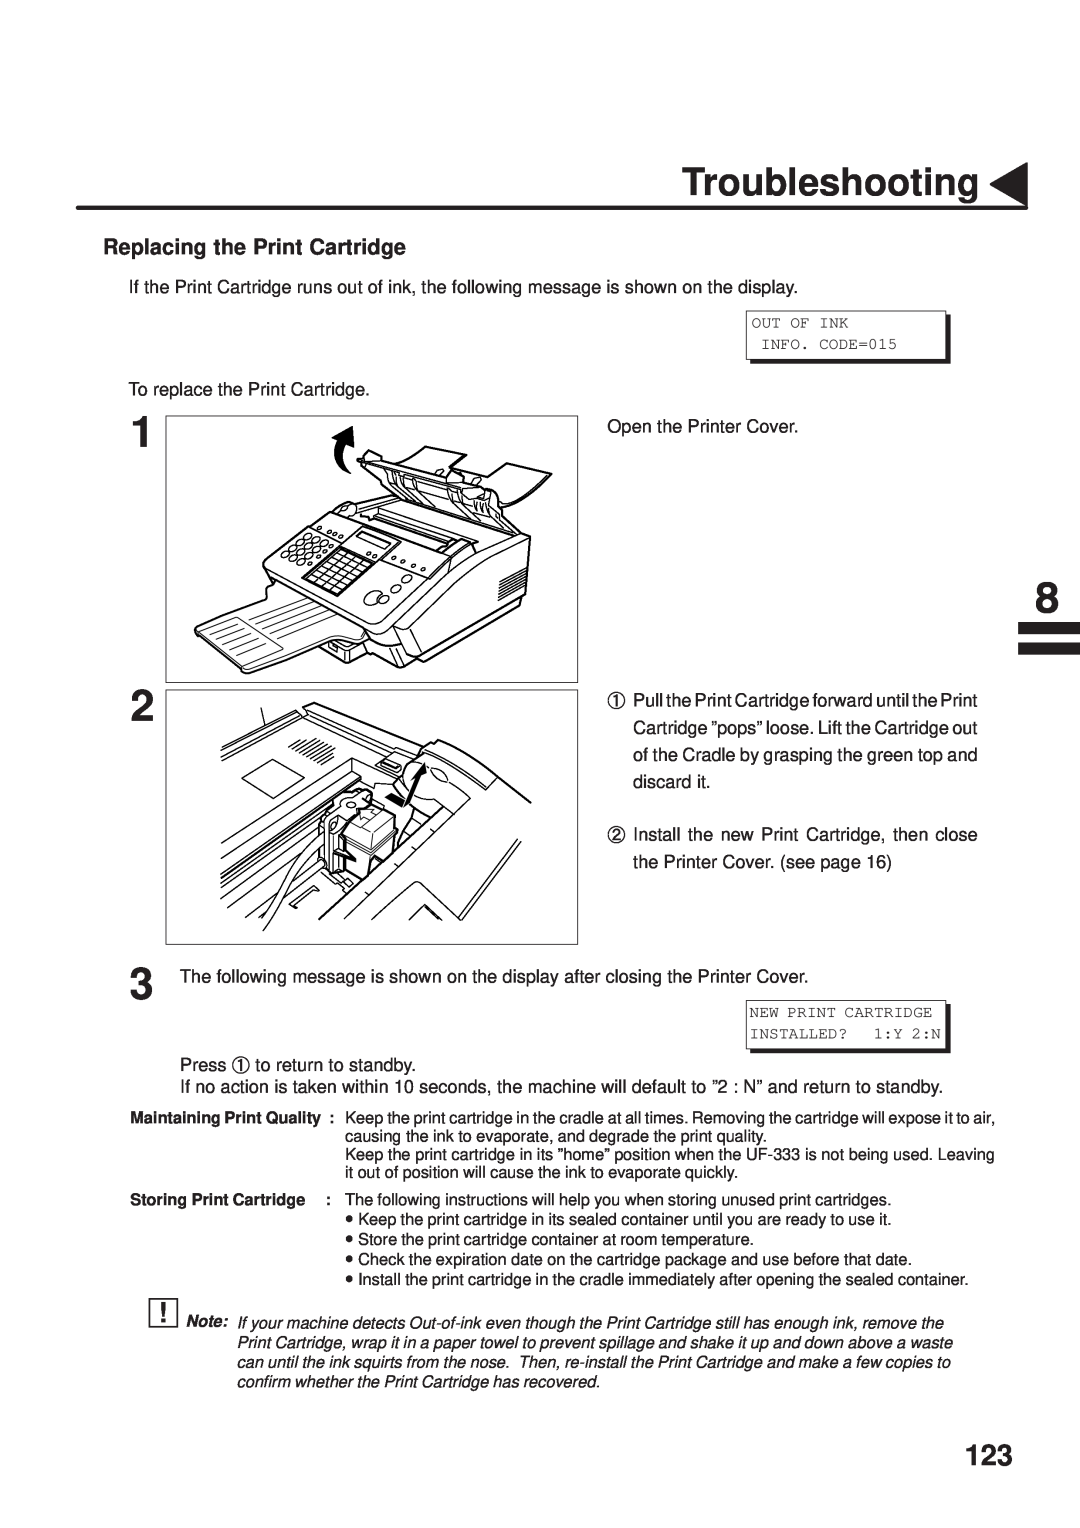 Panasonic UF-333 manual Replacing the Print Cartridge, Troubleshooting 